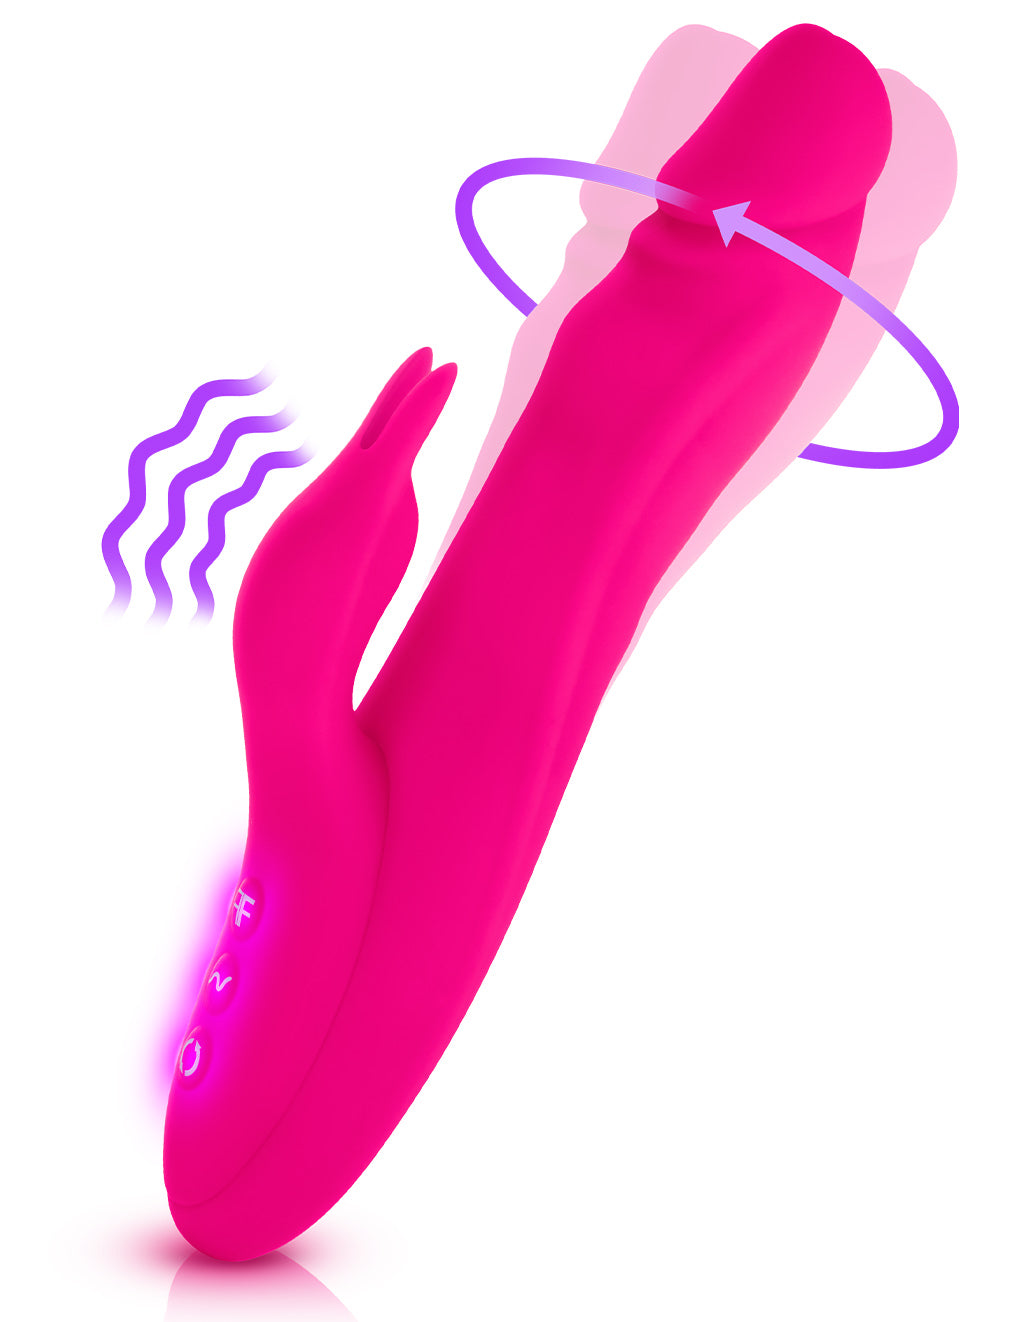 Femme Funn Booster Rabbit- Pink- Vibration Rotation Diagram